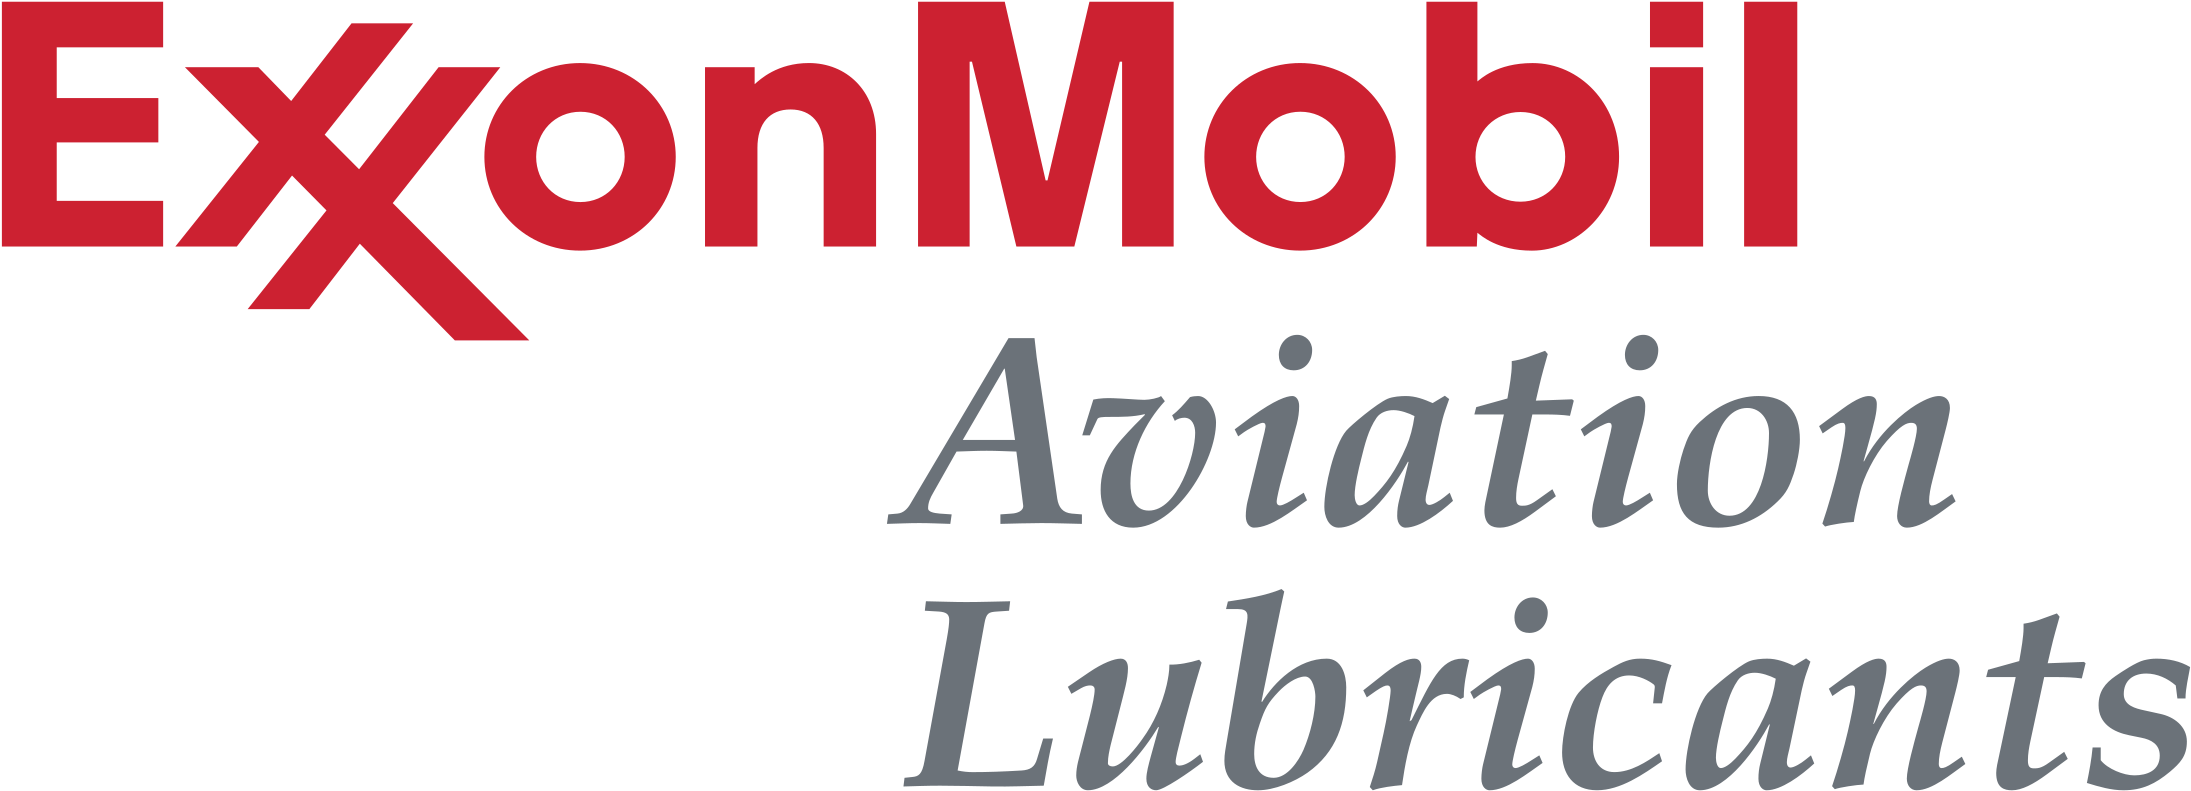 Exxonmobil Aviation Lubricants Logo Png Transparent - Exxon Mobil Aviation Logo Png (2400x2400), Png Download